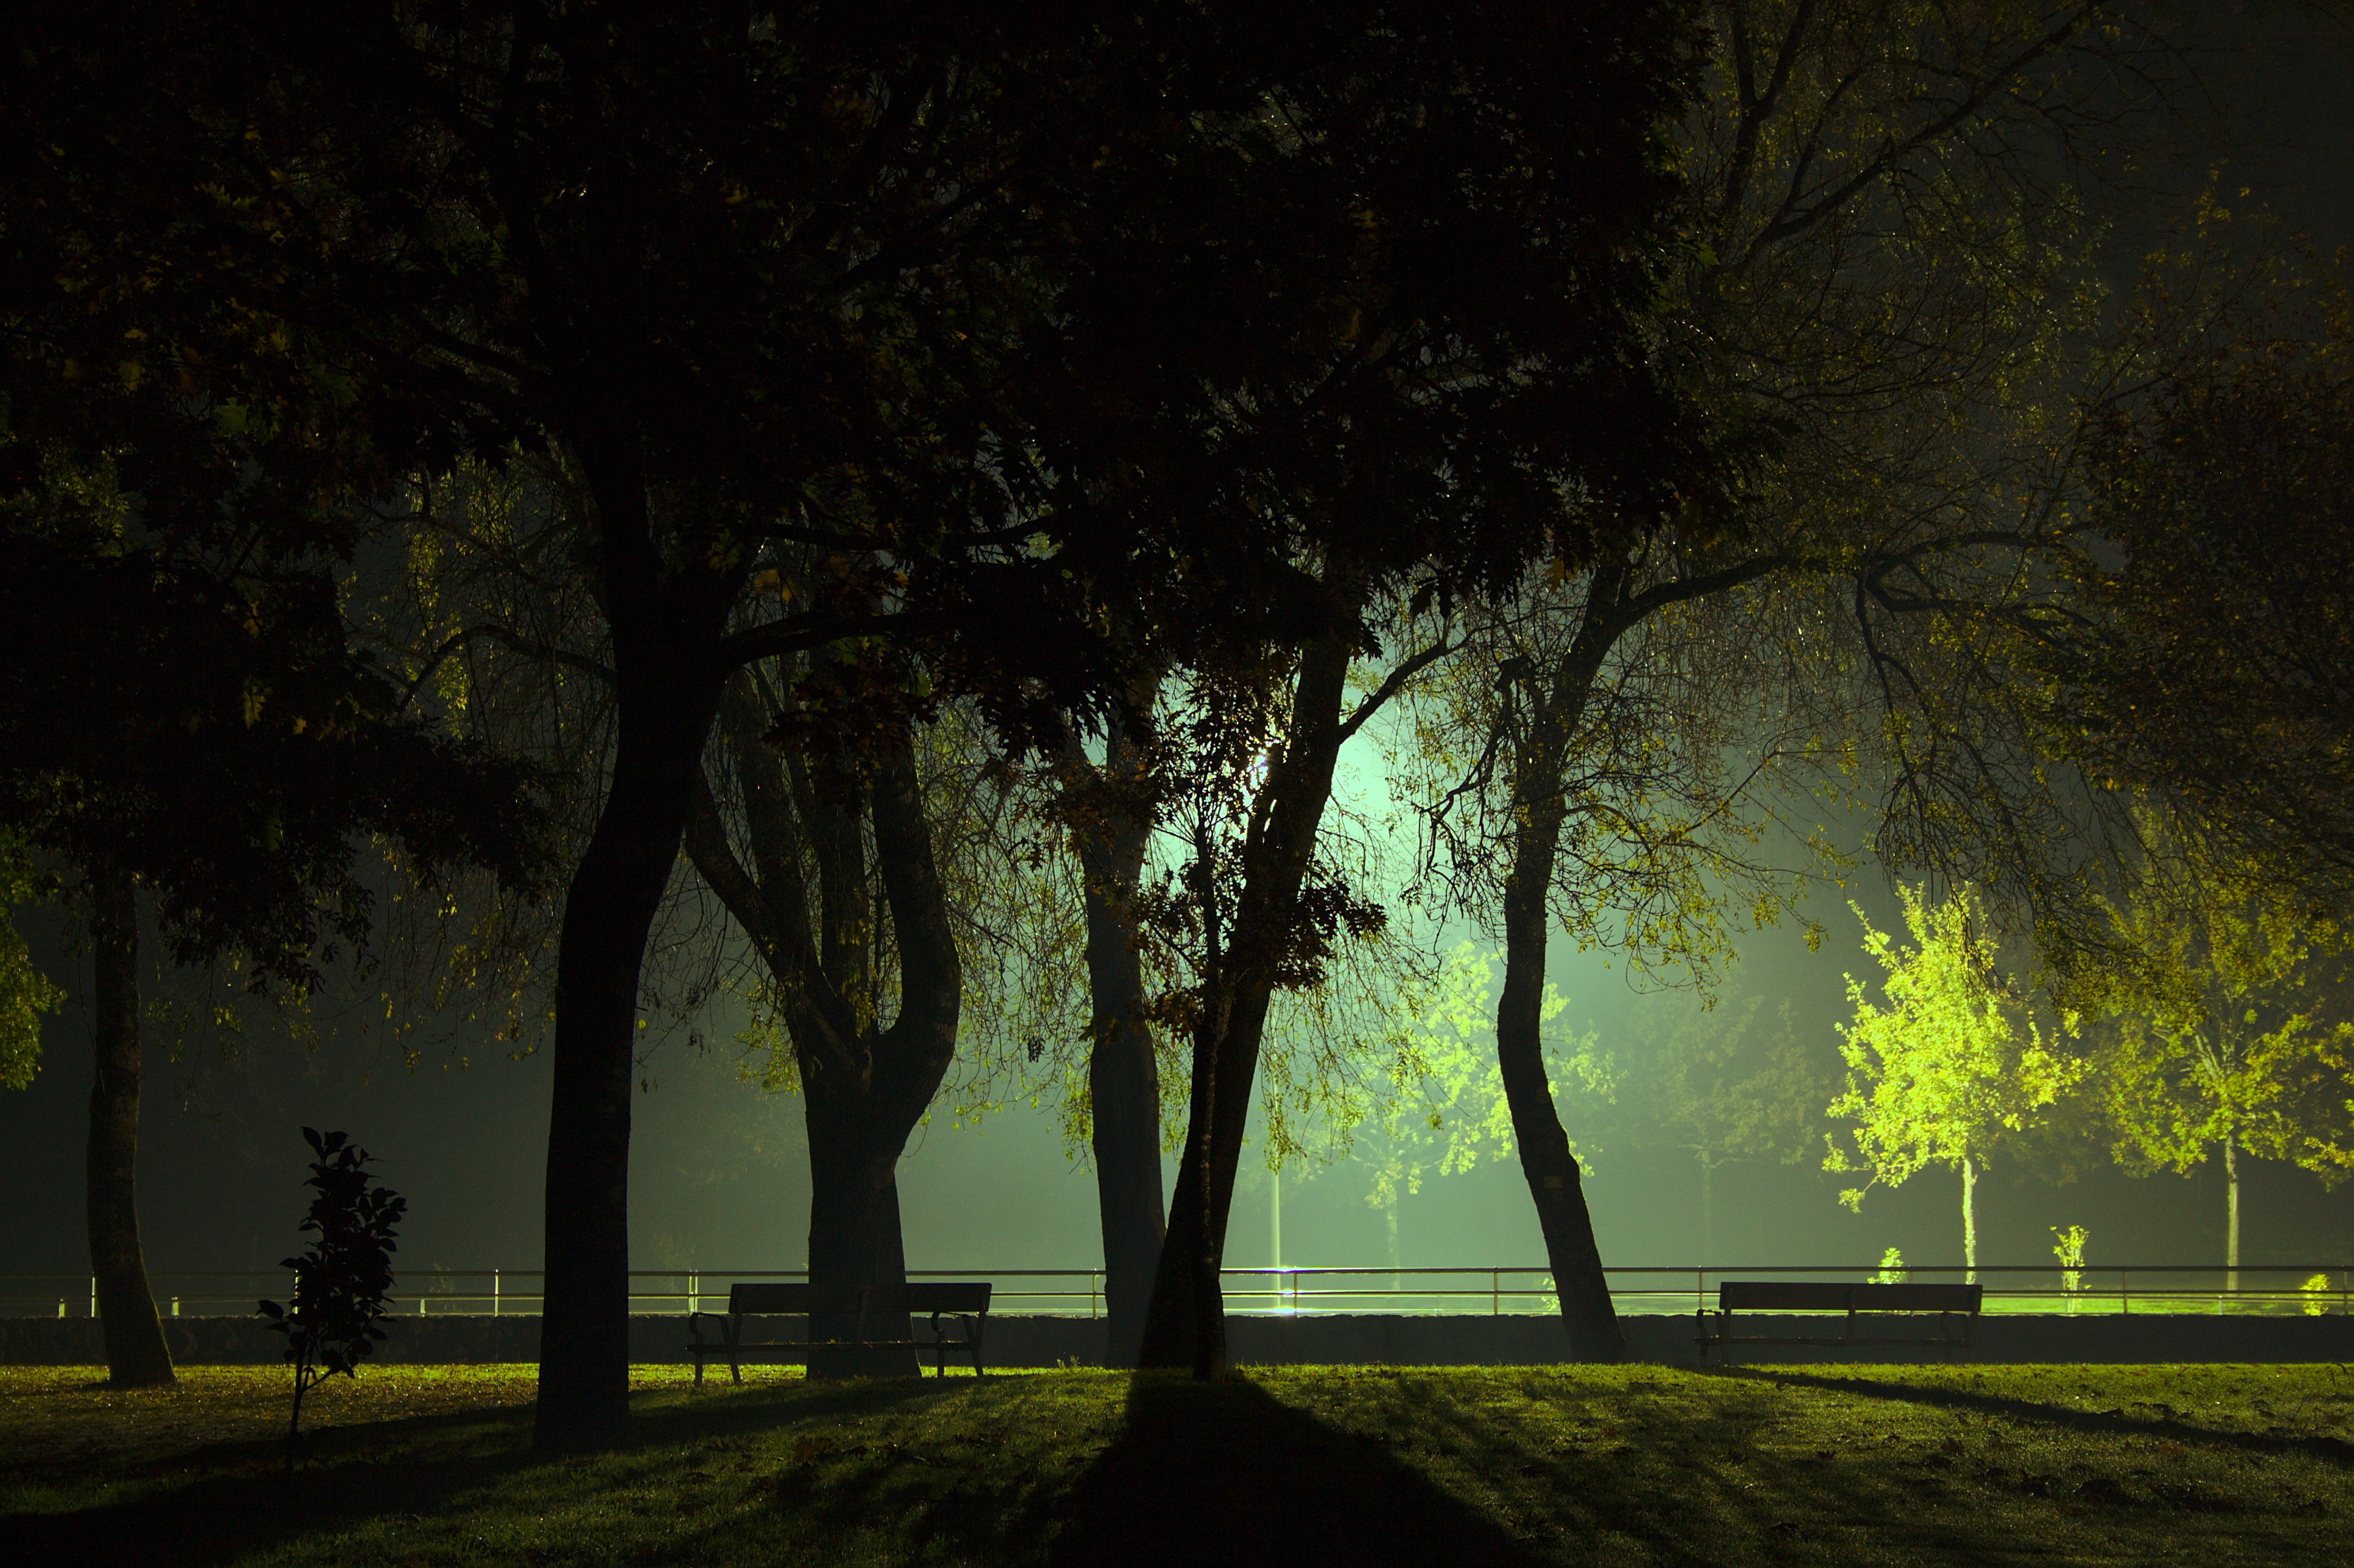 File:In the Park at night, Salvaterra de Miño.jpg - Wikimedia Commons